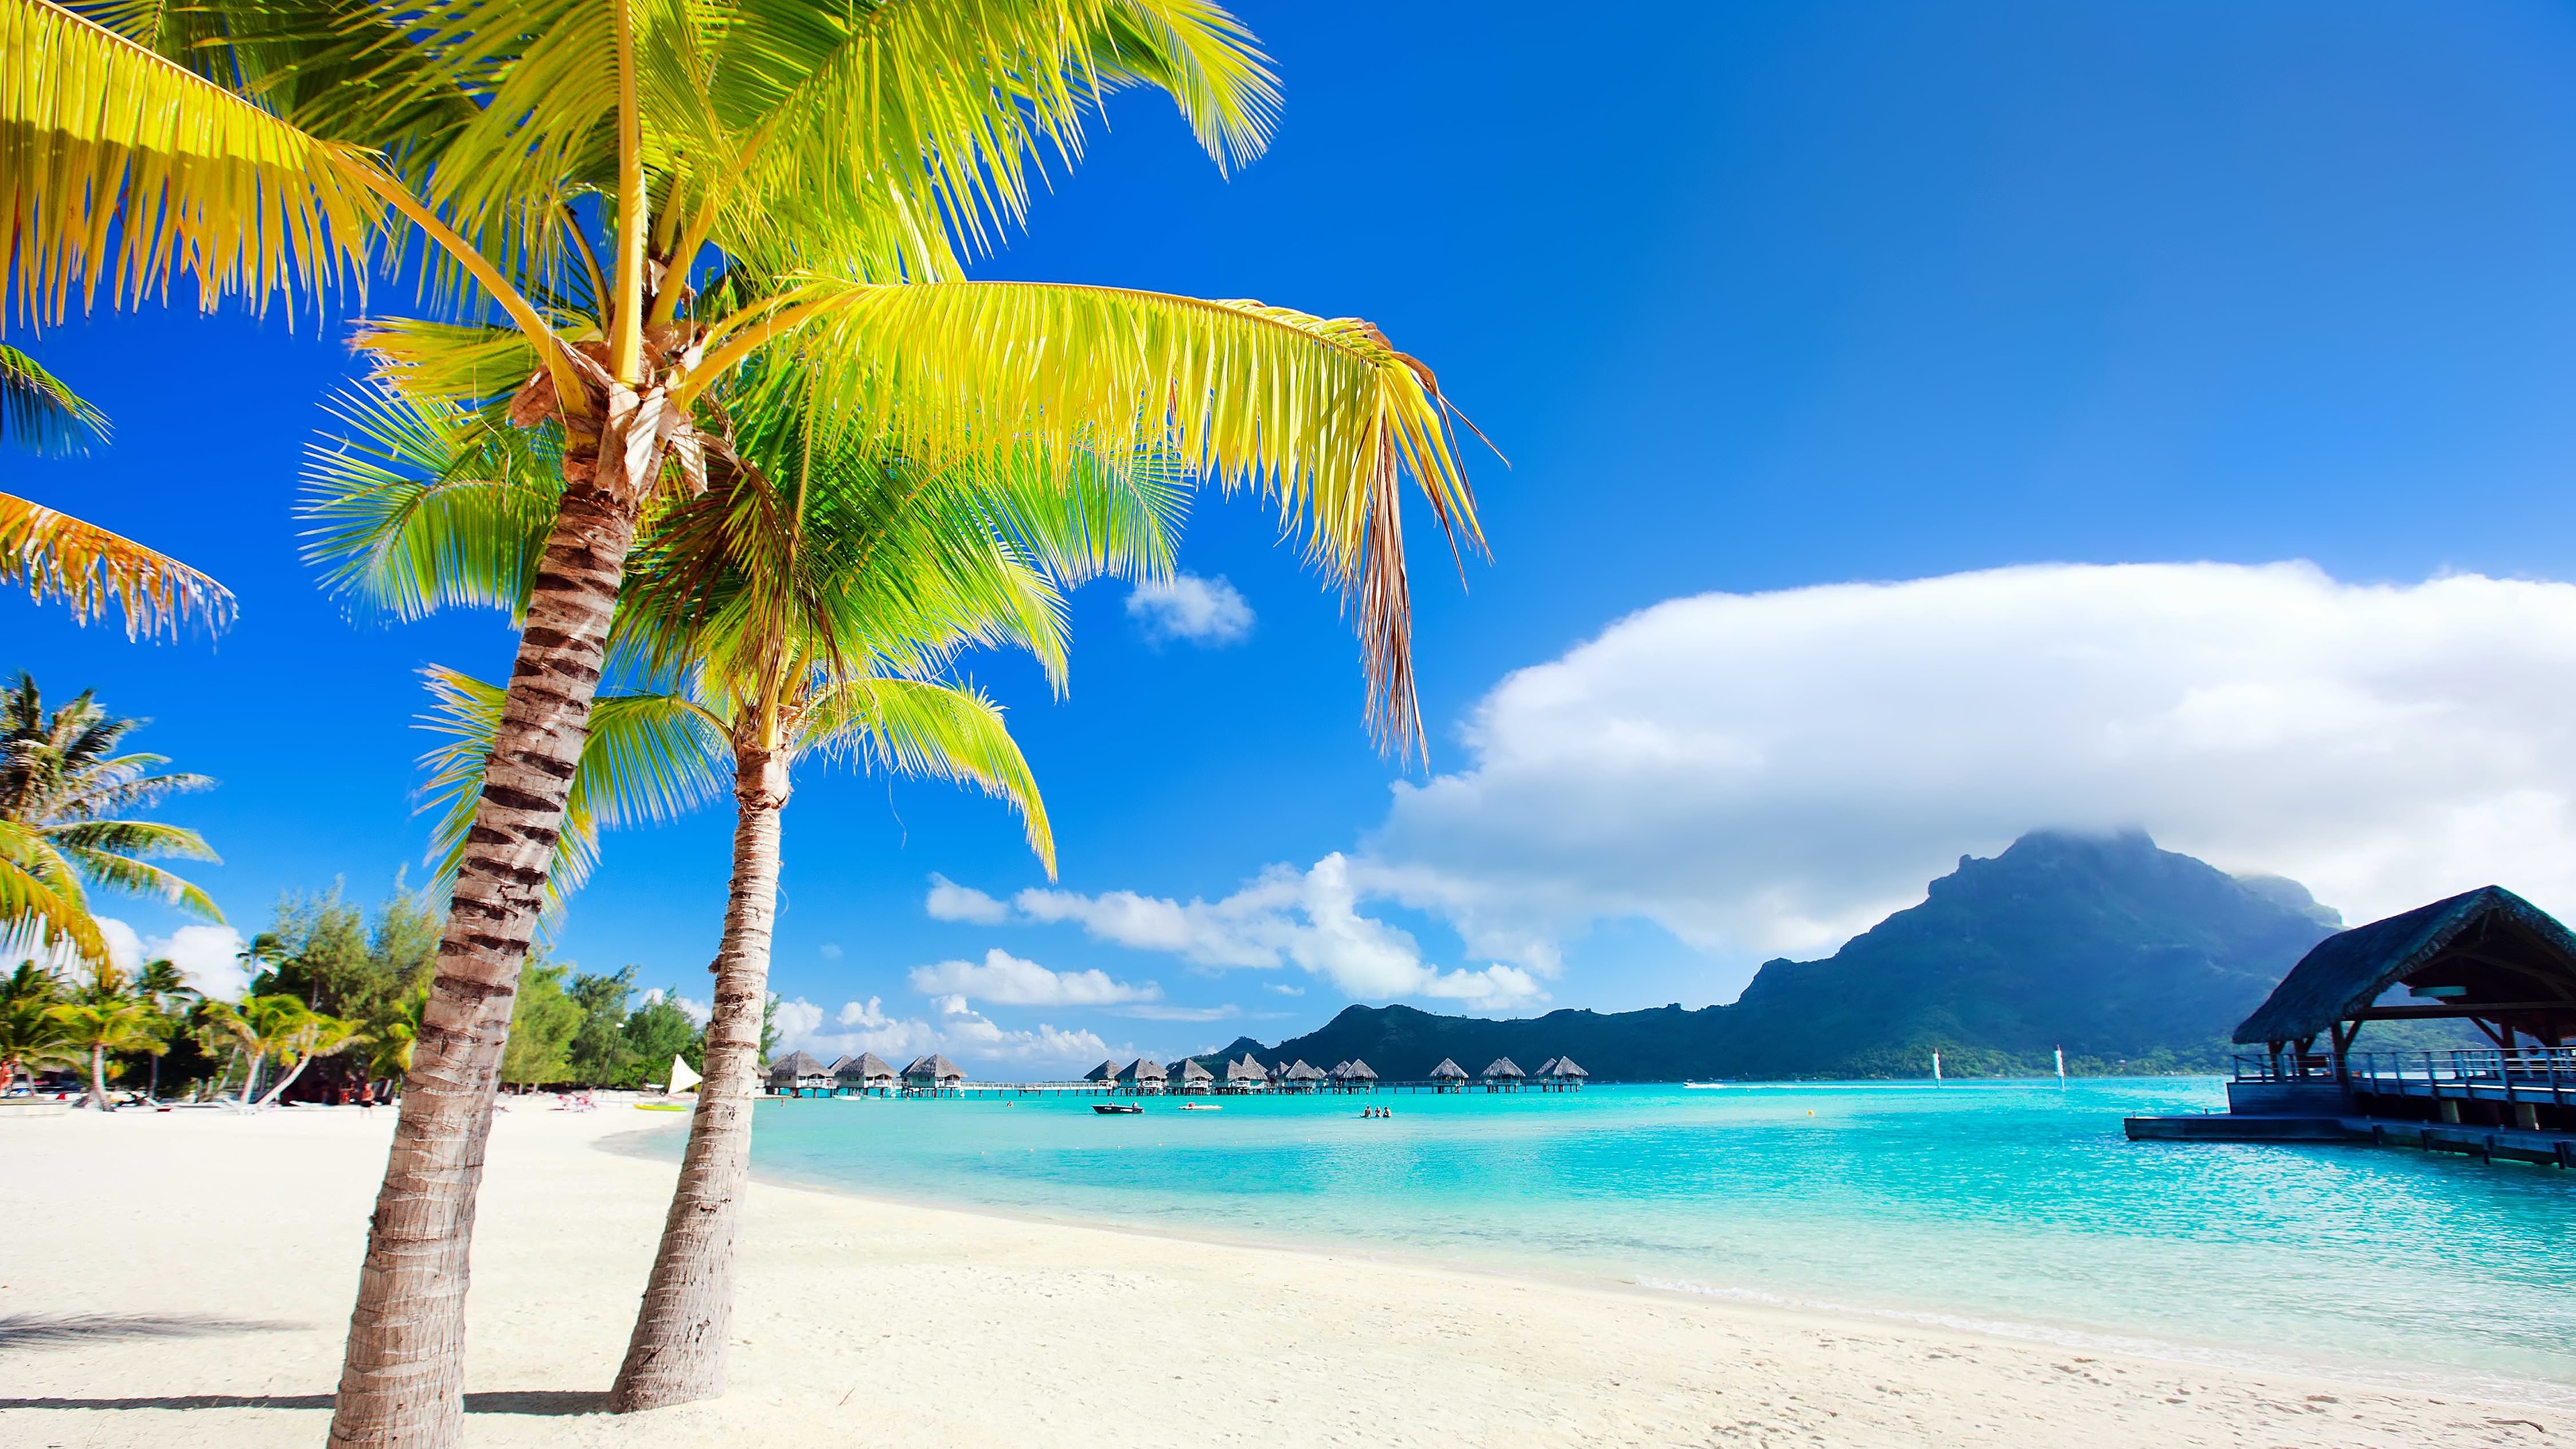 Bora Bora Beach for 3840 x 2160 Ultra HD resolution